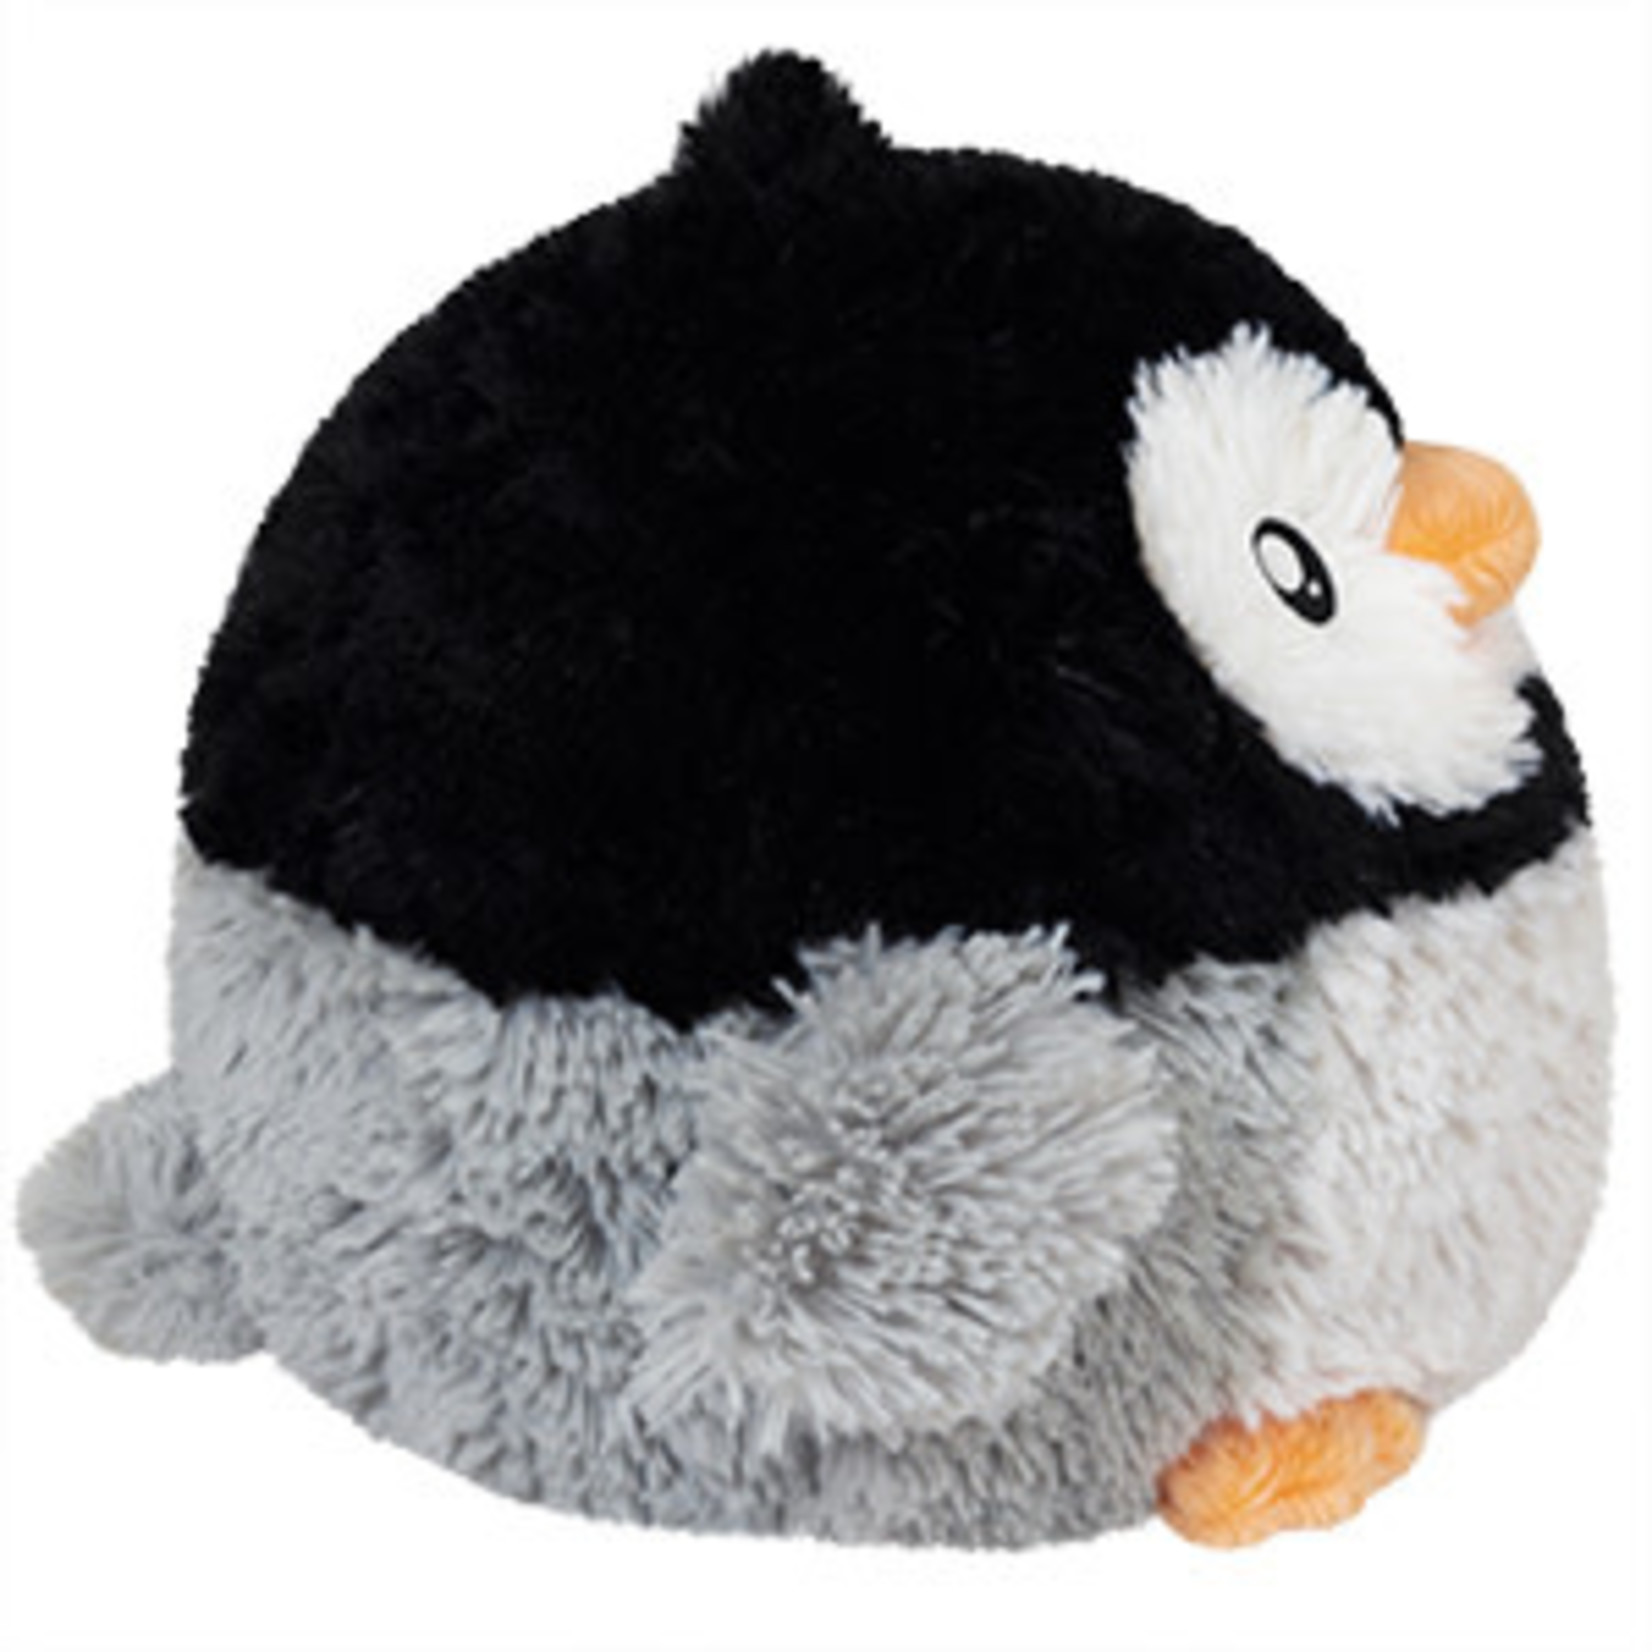 Squishable Mini: Baby Penguin